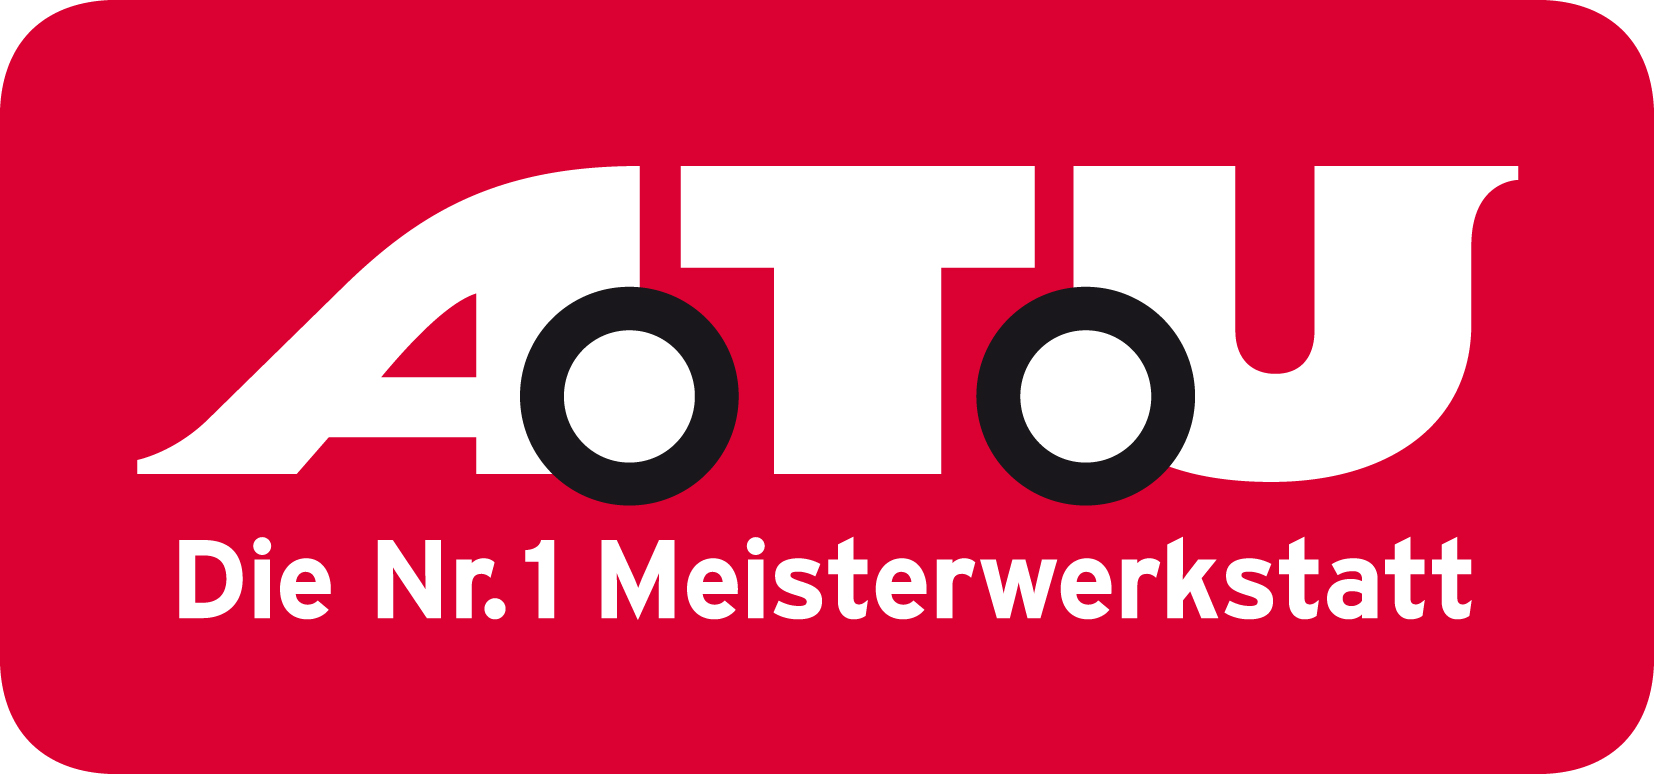 Atu Logo photo - 1